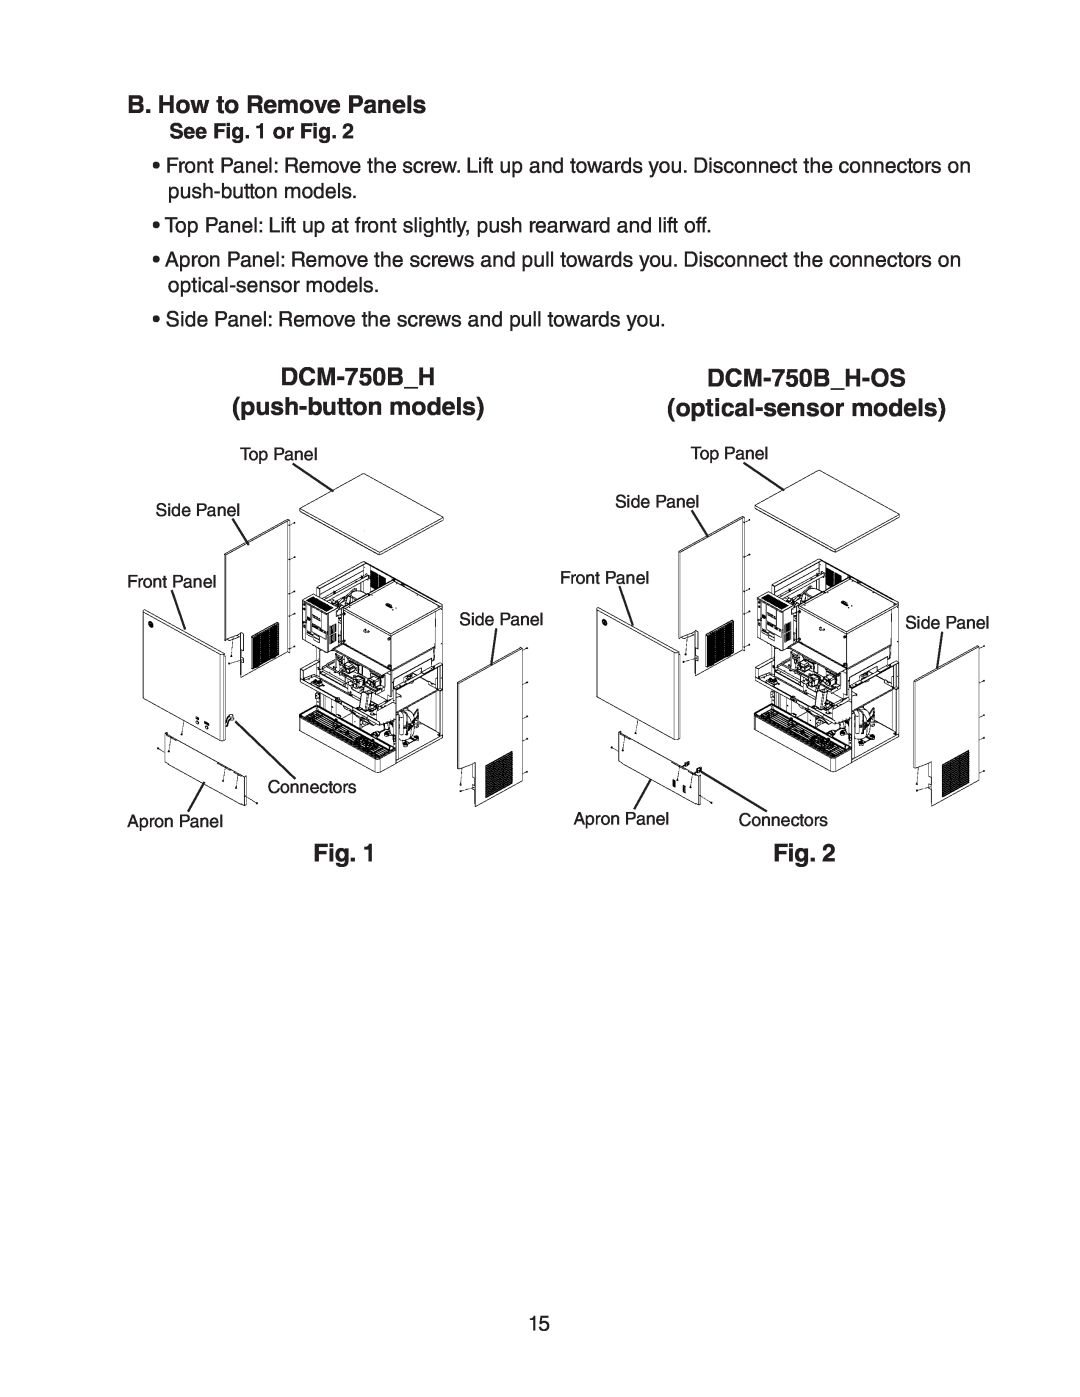 Hoshizaki DCM-750BAH(-OS) B. How to Remove Panels, Fig, DCM-750B_H-OS, push-buttonmodels, optical-sensormodels 